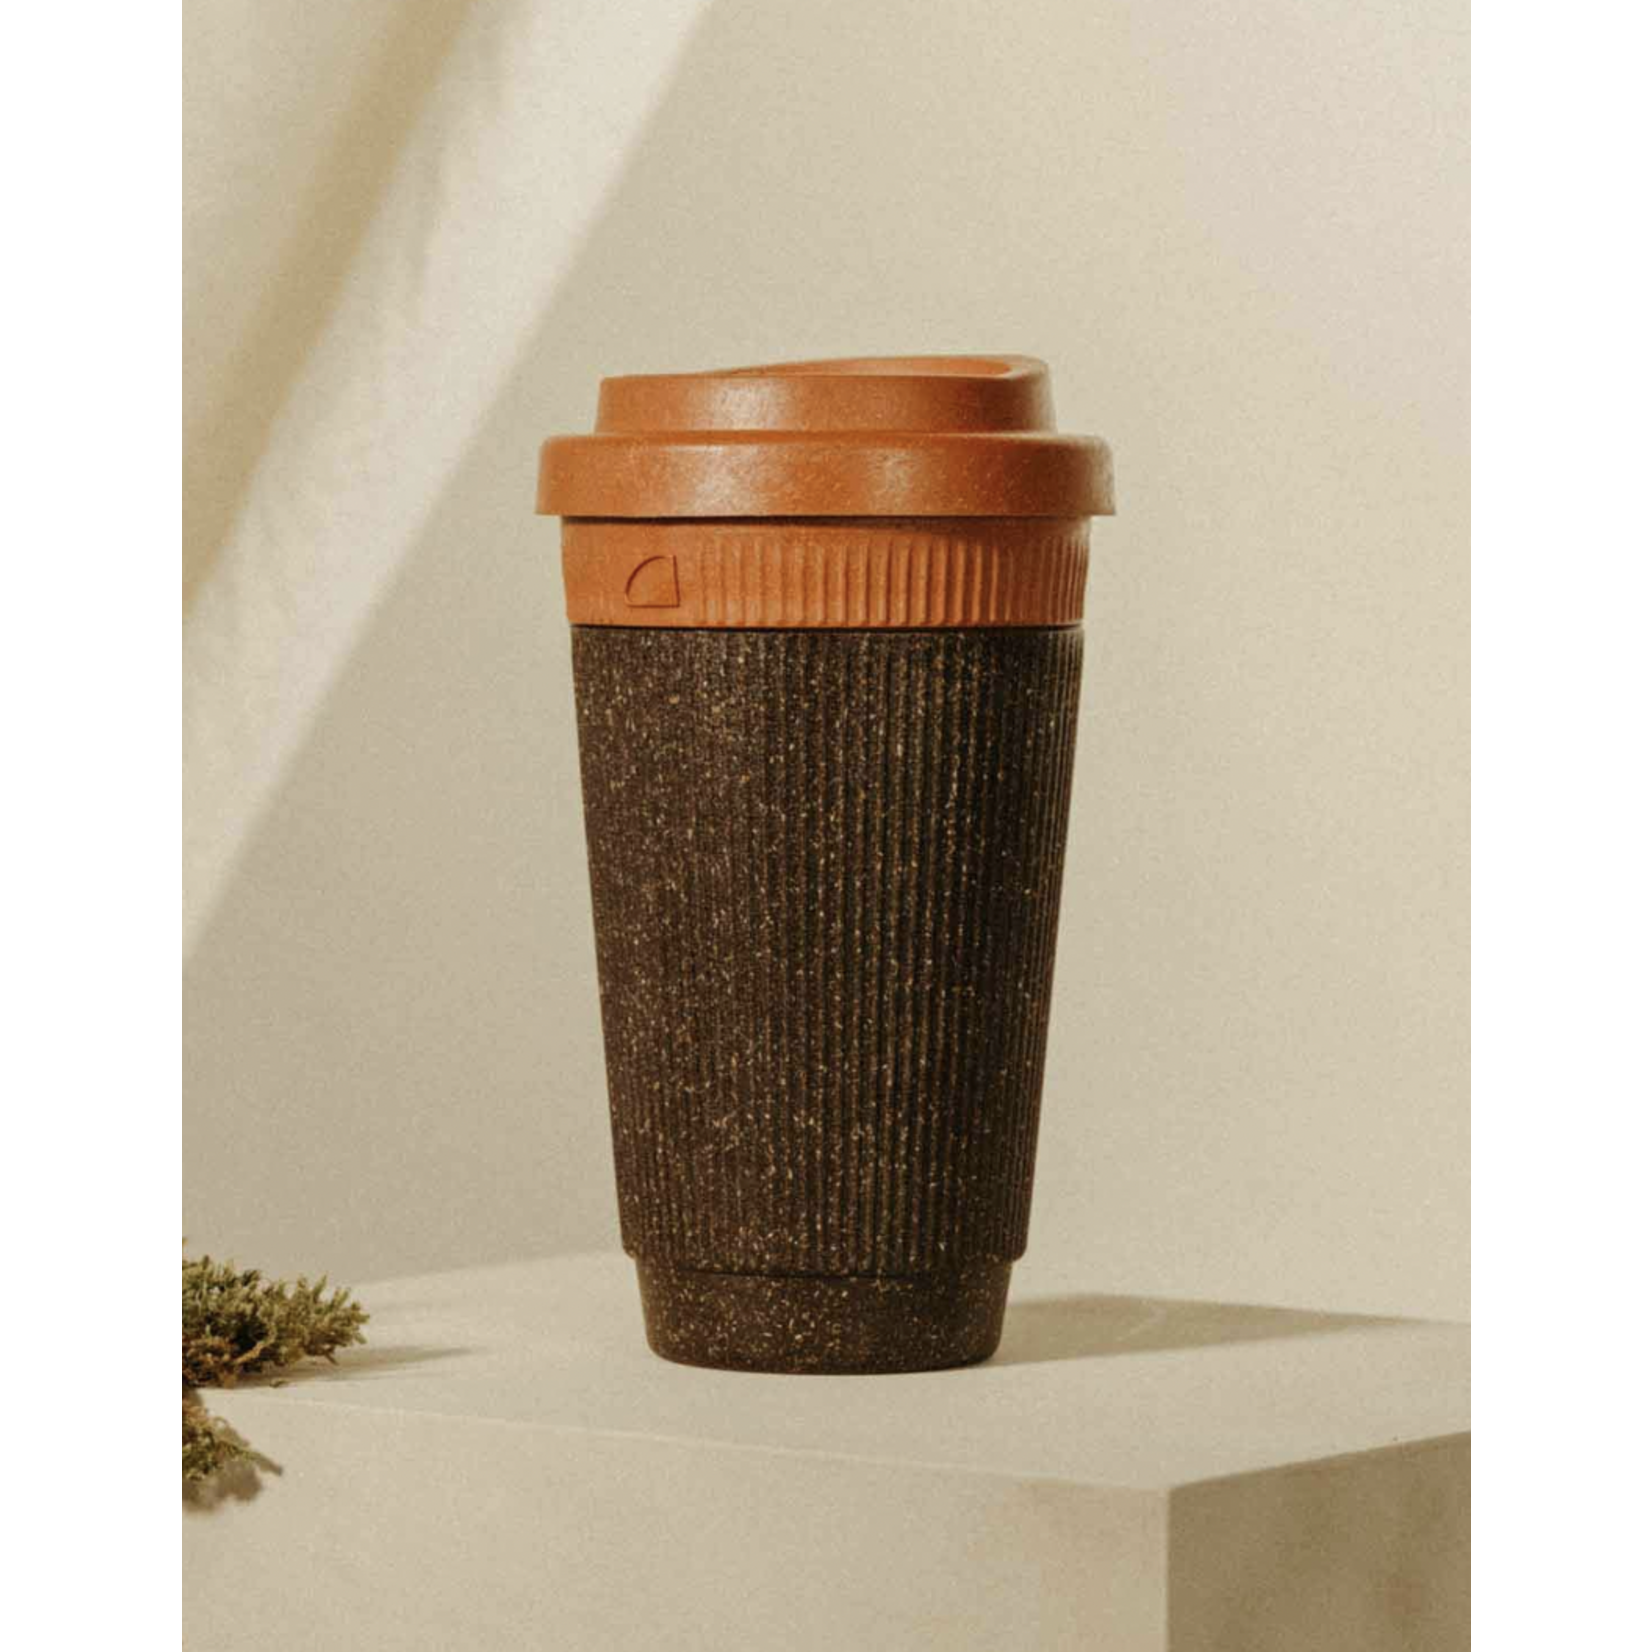 Kaffeeform Weducer Cup Refined - Coffee / Cayenne ikonischen Kaffeeform Coffee-Material